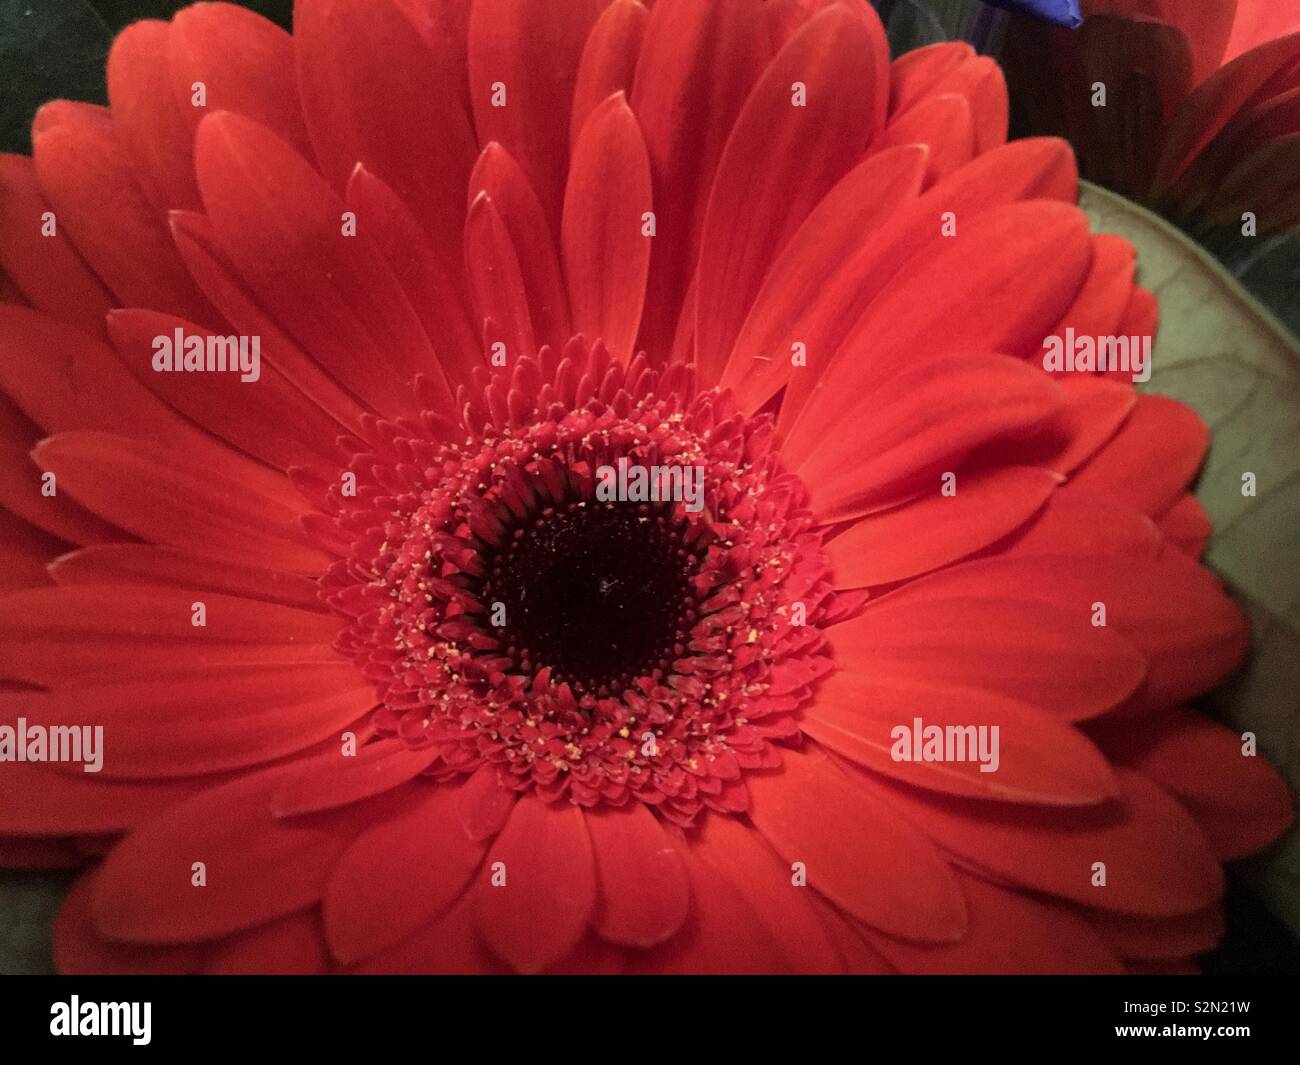 Closeup view of a beautiful fresh deep red-orange Gerbera Daisy flower head with a black center. Stock Photo